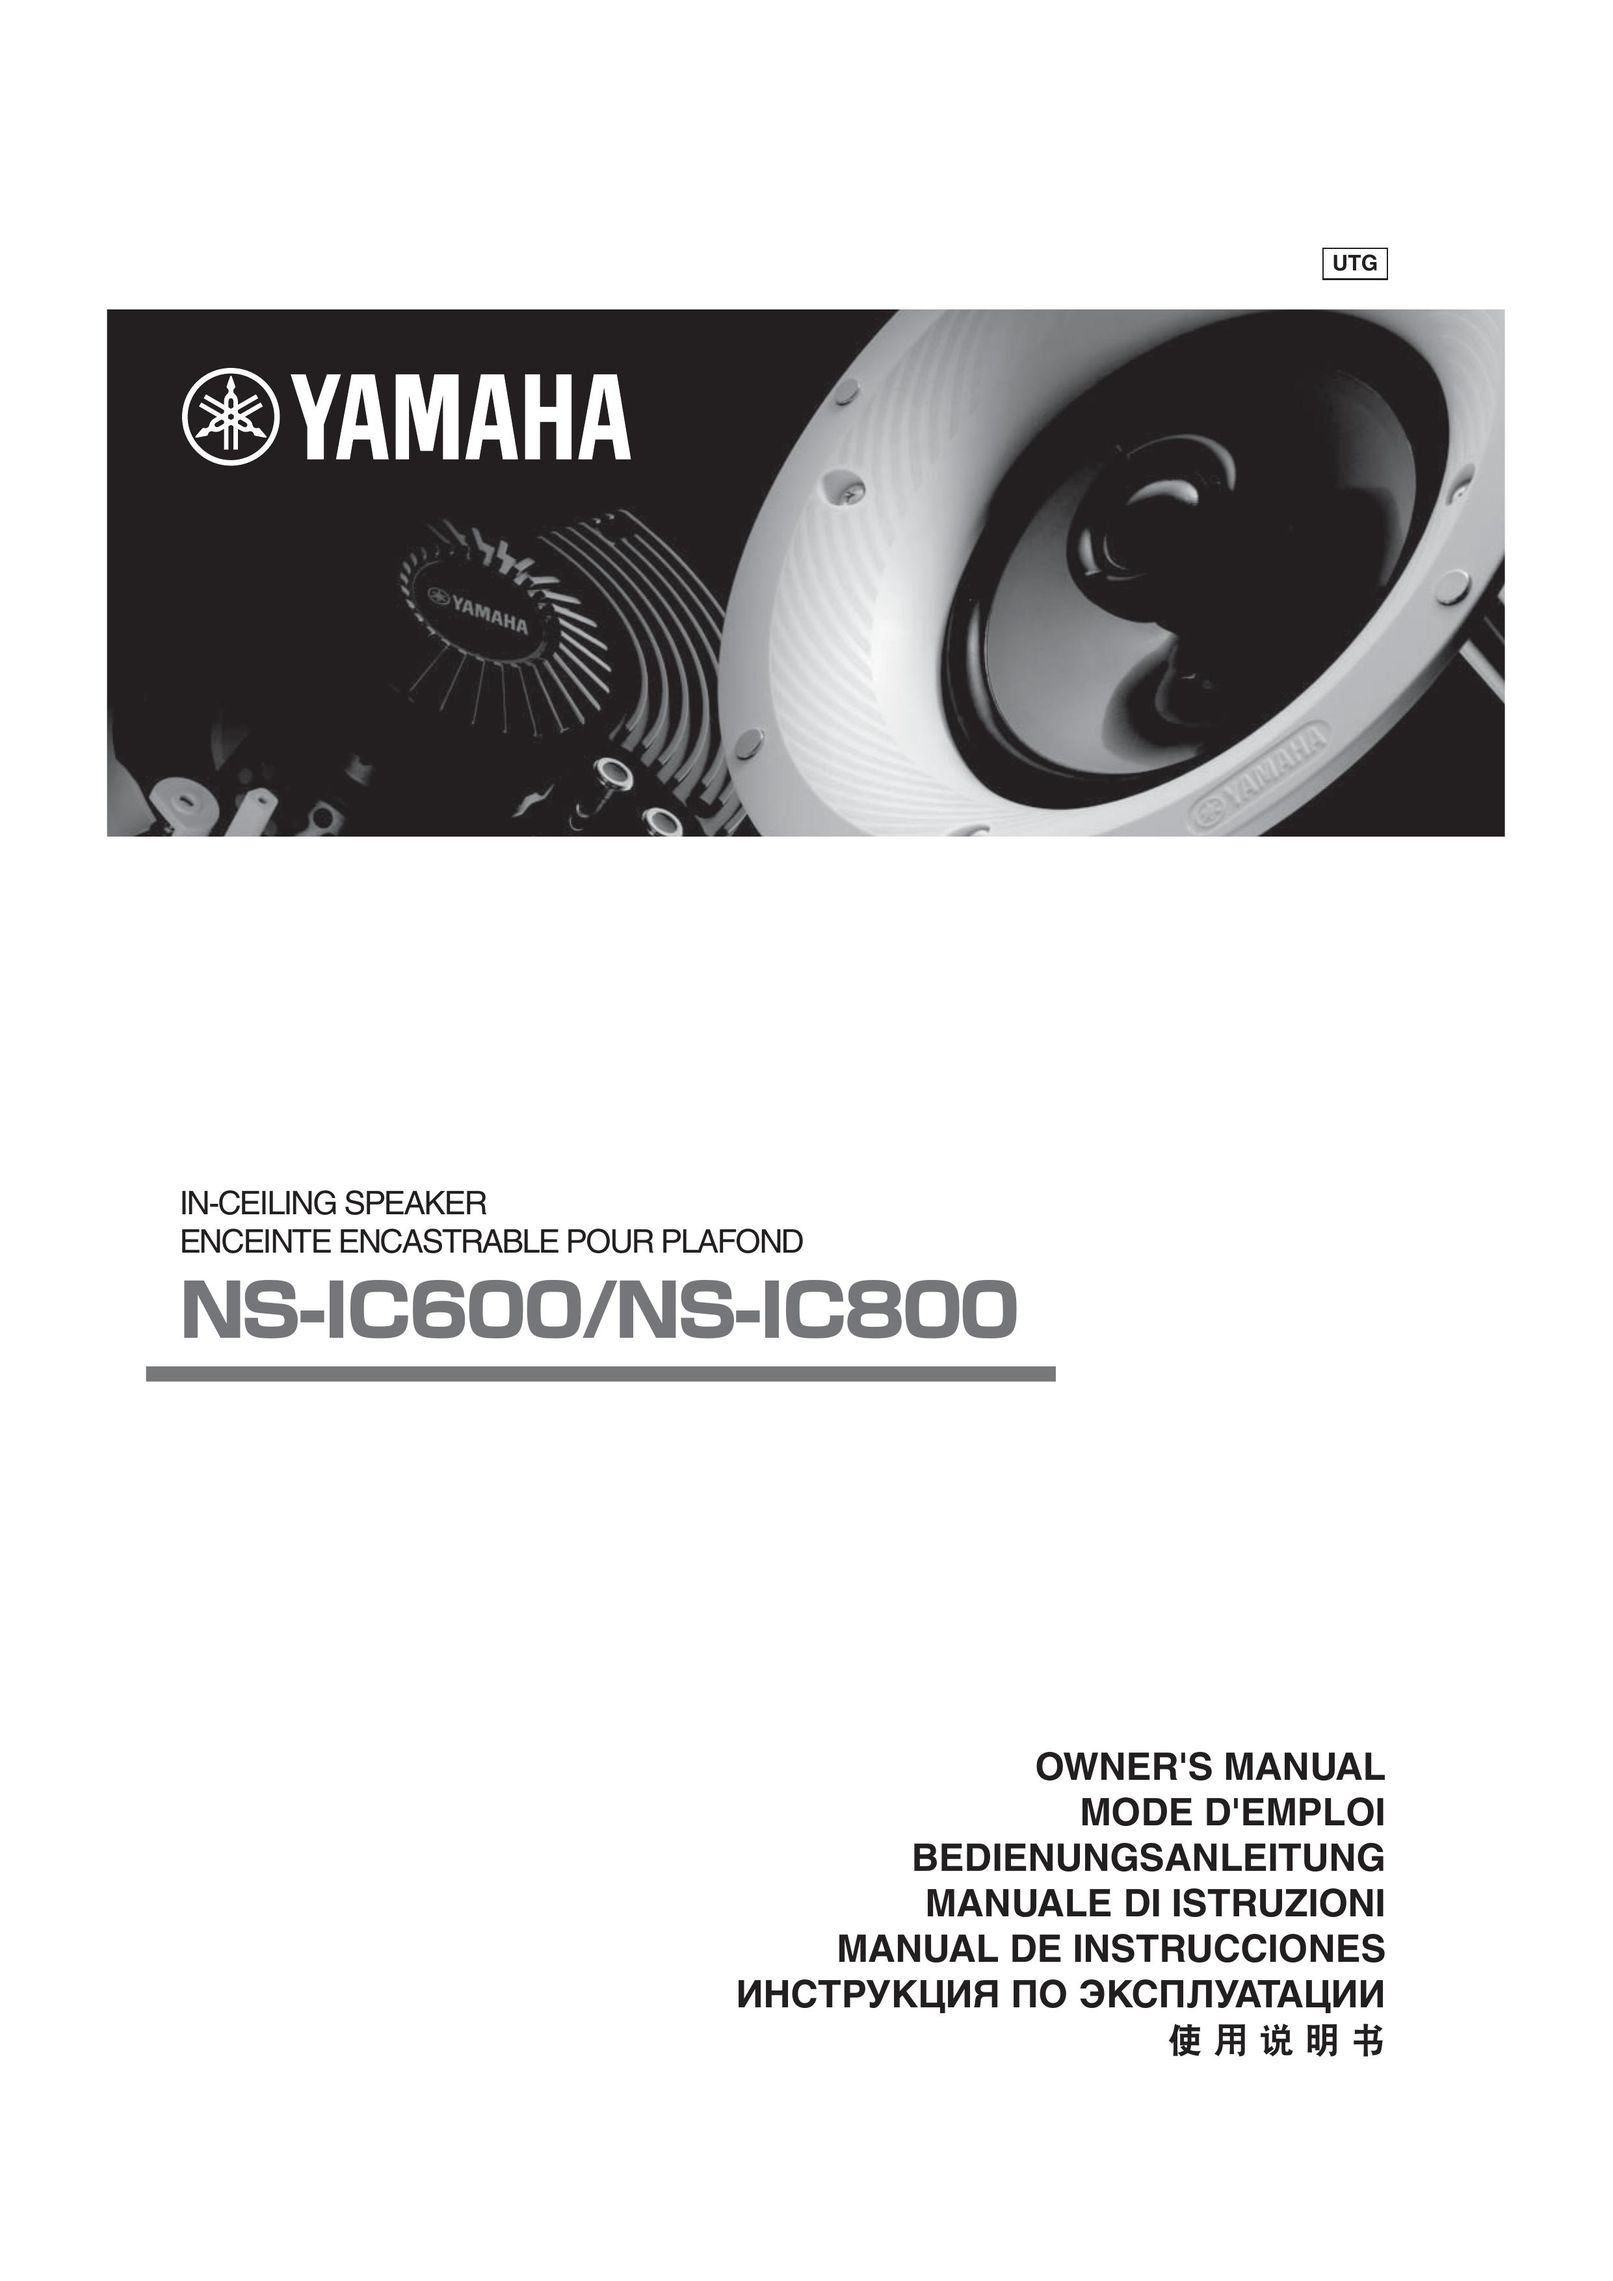 Yamaha NS-IC600/NS-IC800 Car Speaker User Manual